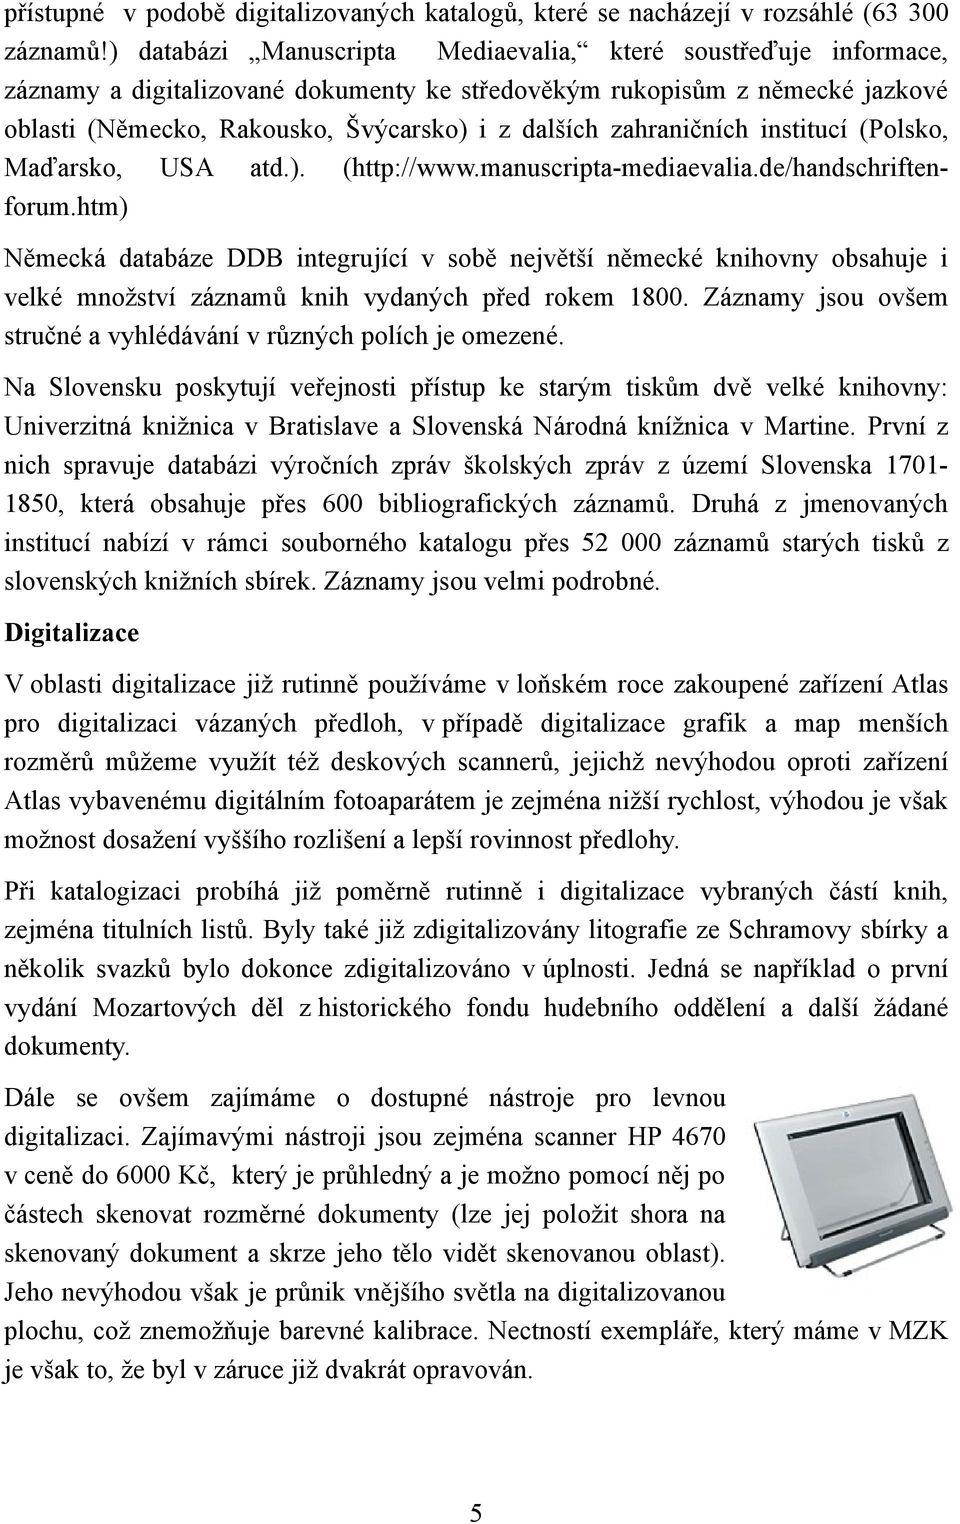 zahraničních institucí (Polsko, Maďarsko, USA atd.). (http://www.manuscripta-mediaevalia.de/handschriftenforum.